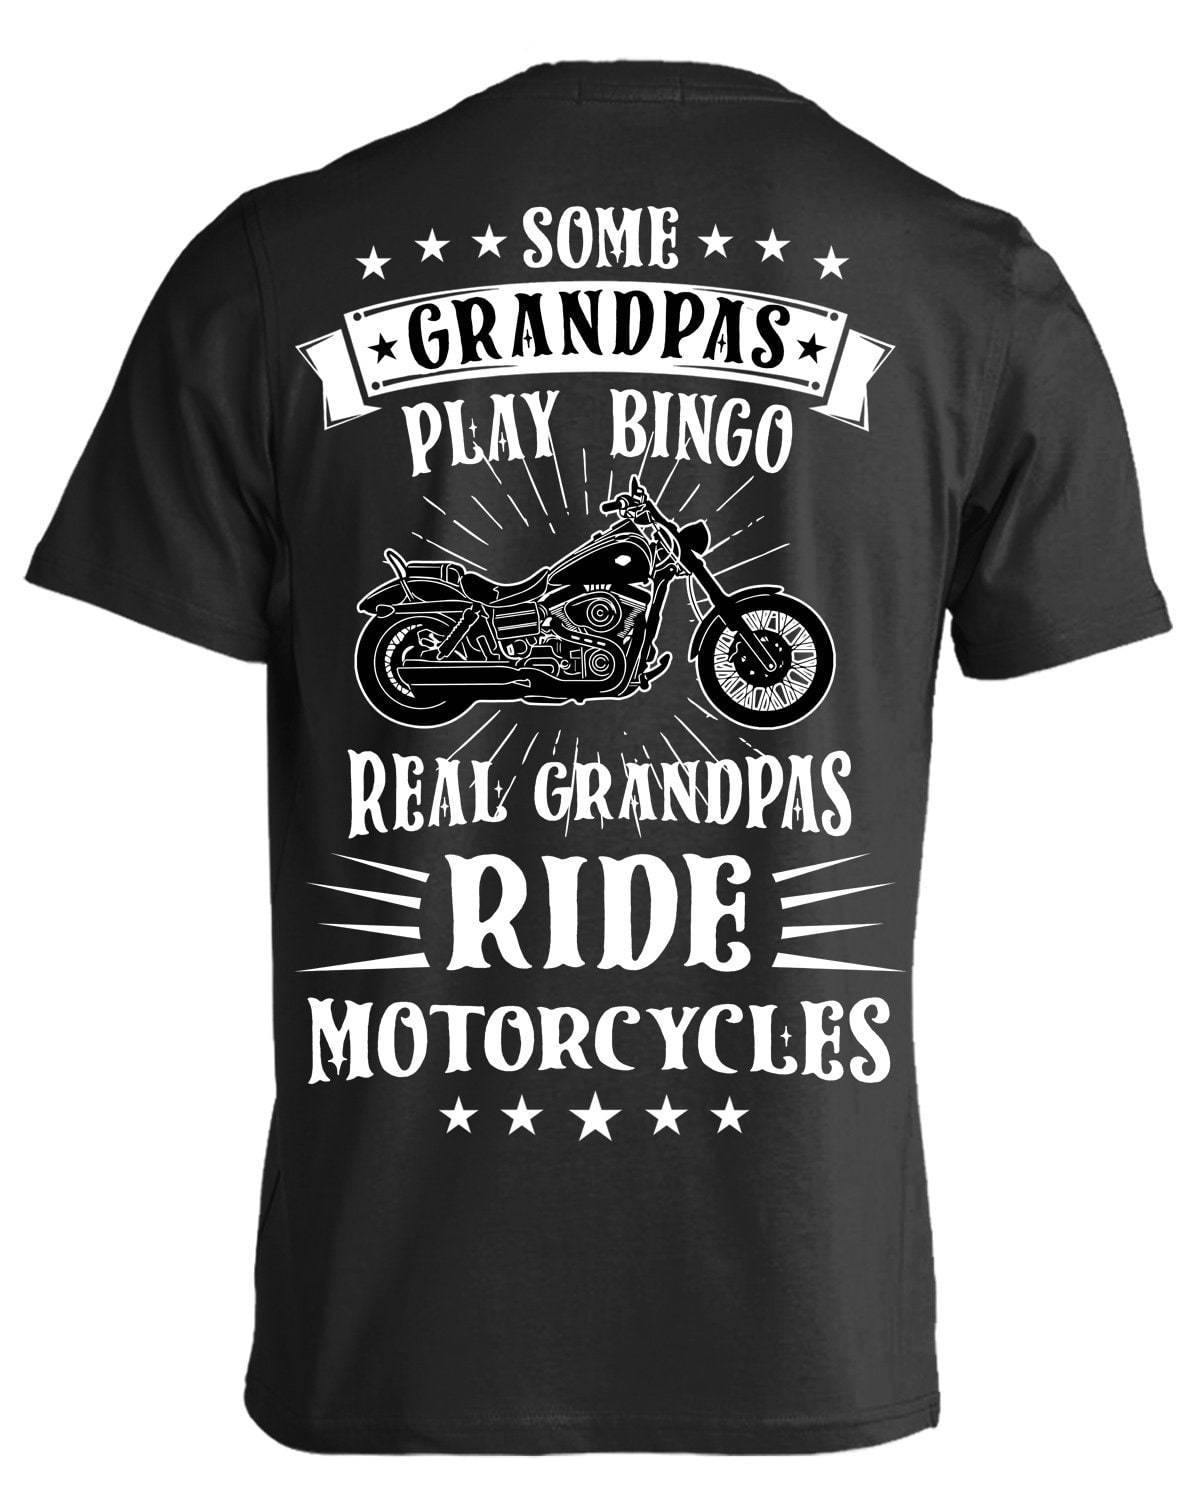 Real Grandpas Ride Motorcycles T Shirt The Bikers Den 